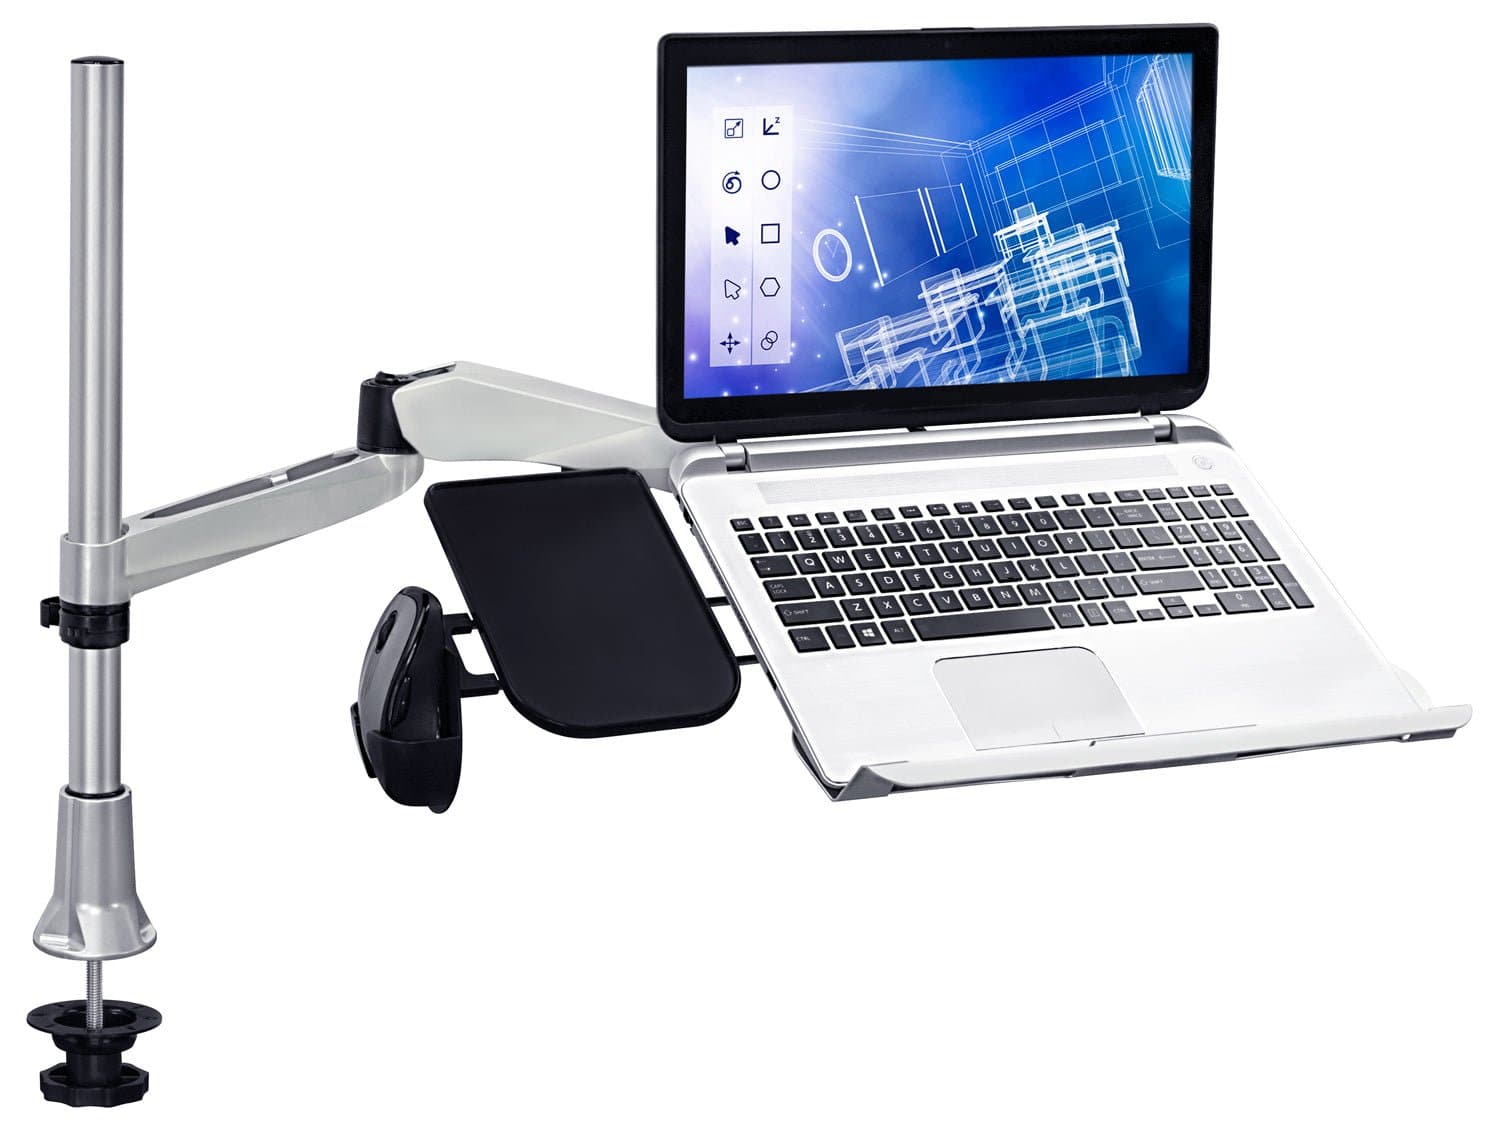 Full Motion Desk Stand for Laptop - Mount-It!